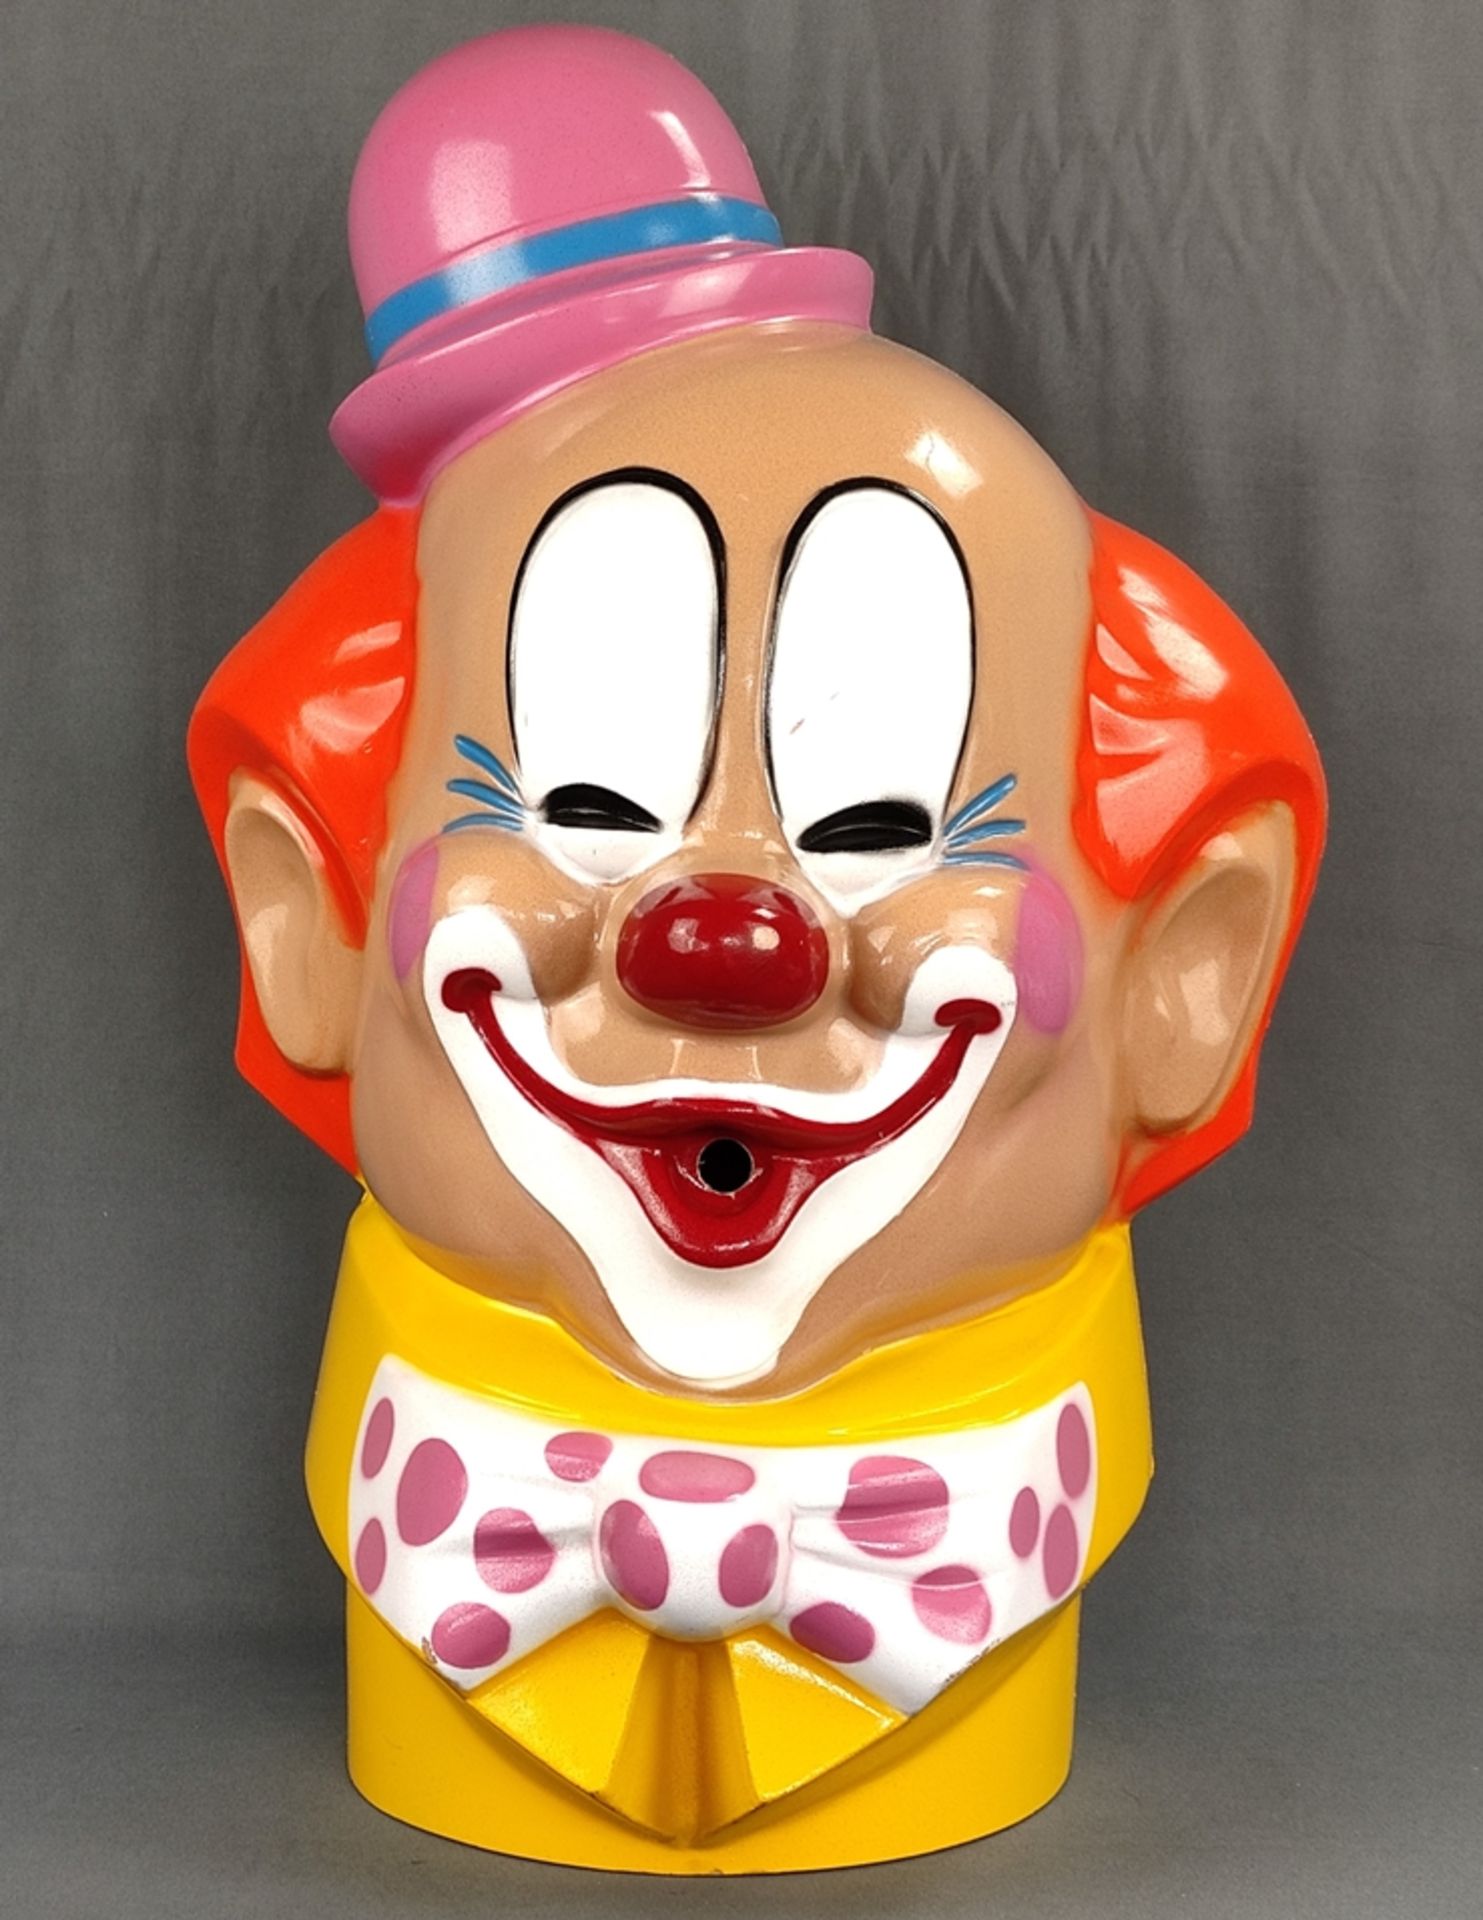 Clown head as balloon inflator, balloon inflator, 1974, Beverly Hills Calif, polychrome, plastic, h